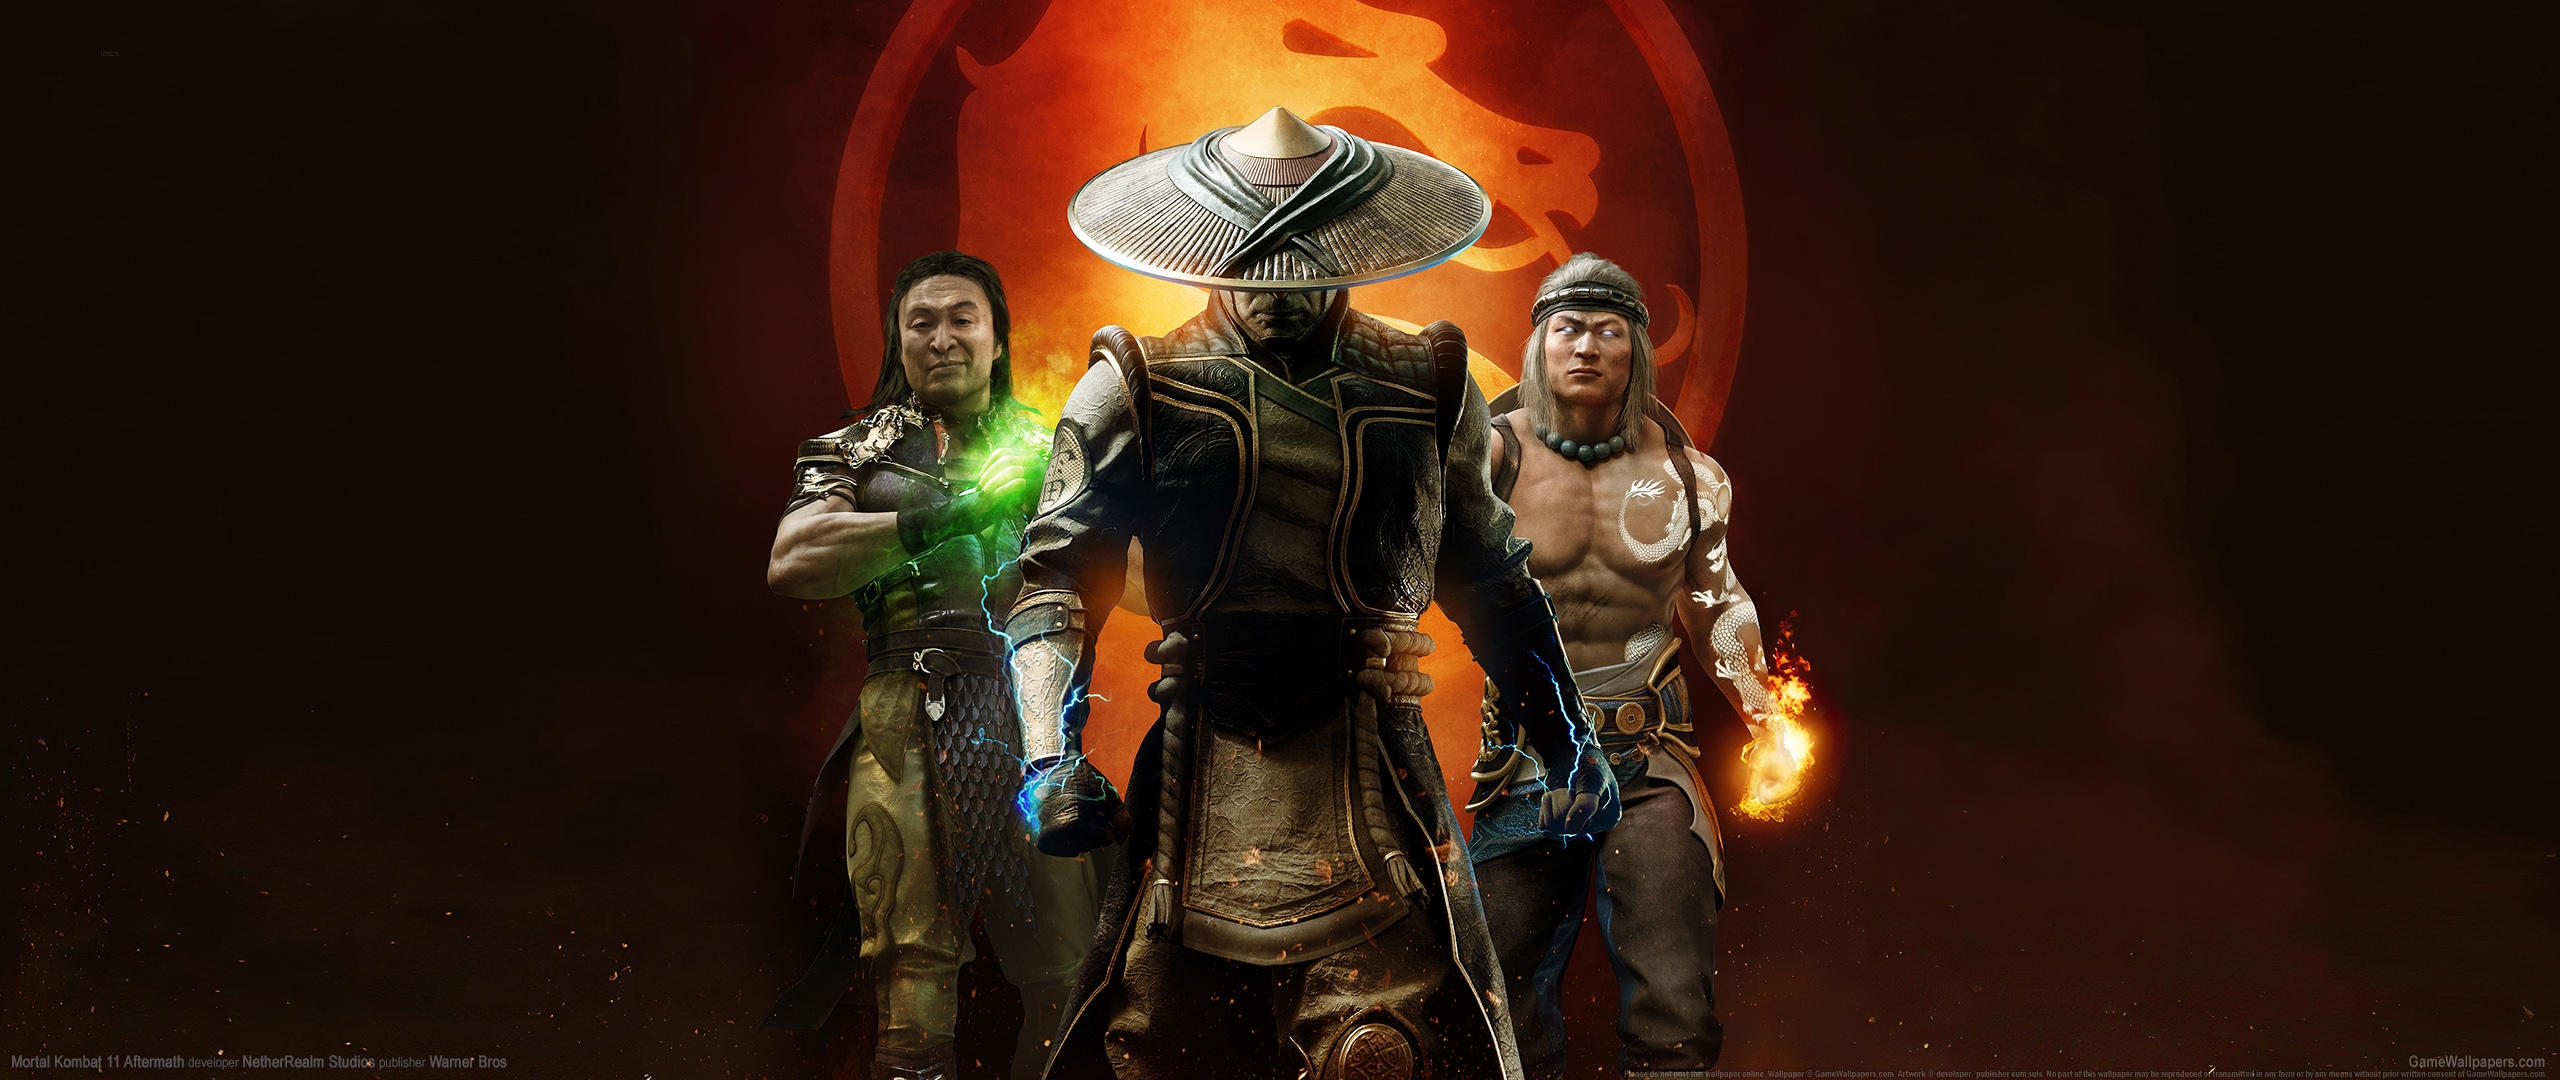 Mortal Kombat 11 Aftermath 2560x1080 wallpaper or background 01